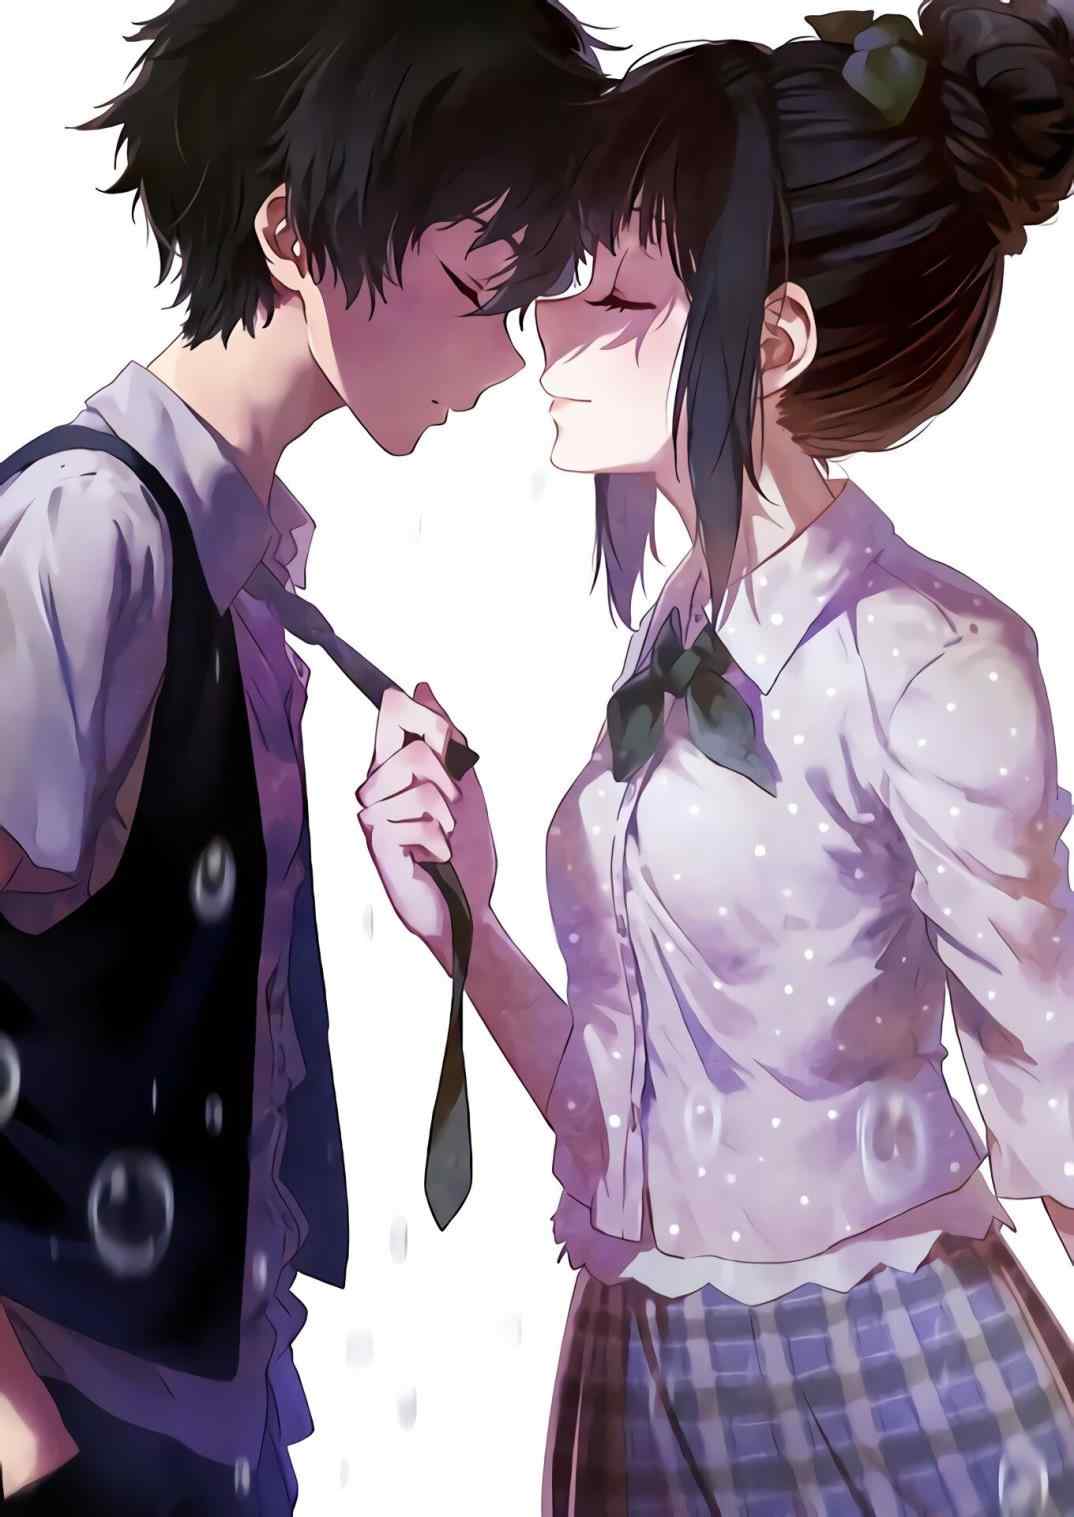  cute anime couple wallpapers  AnimeCouple Wallpapers  Facebook